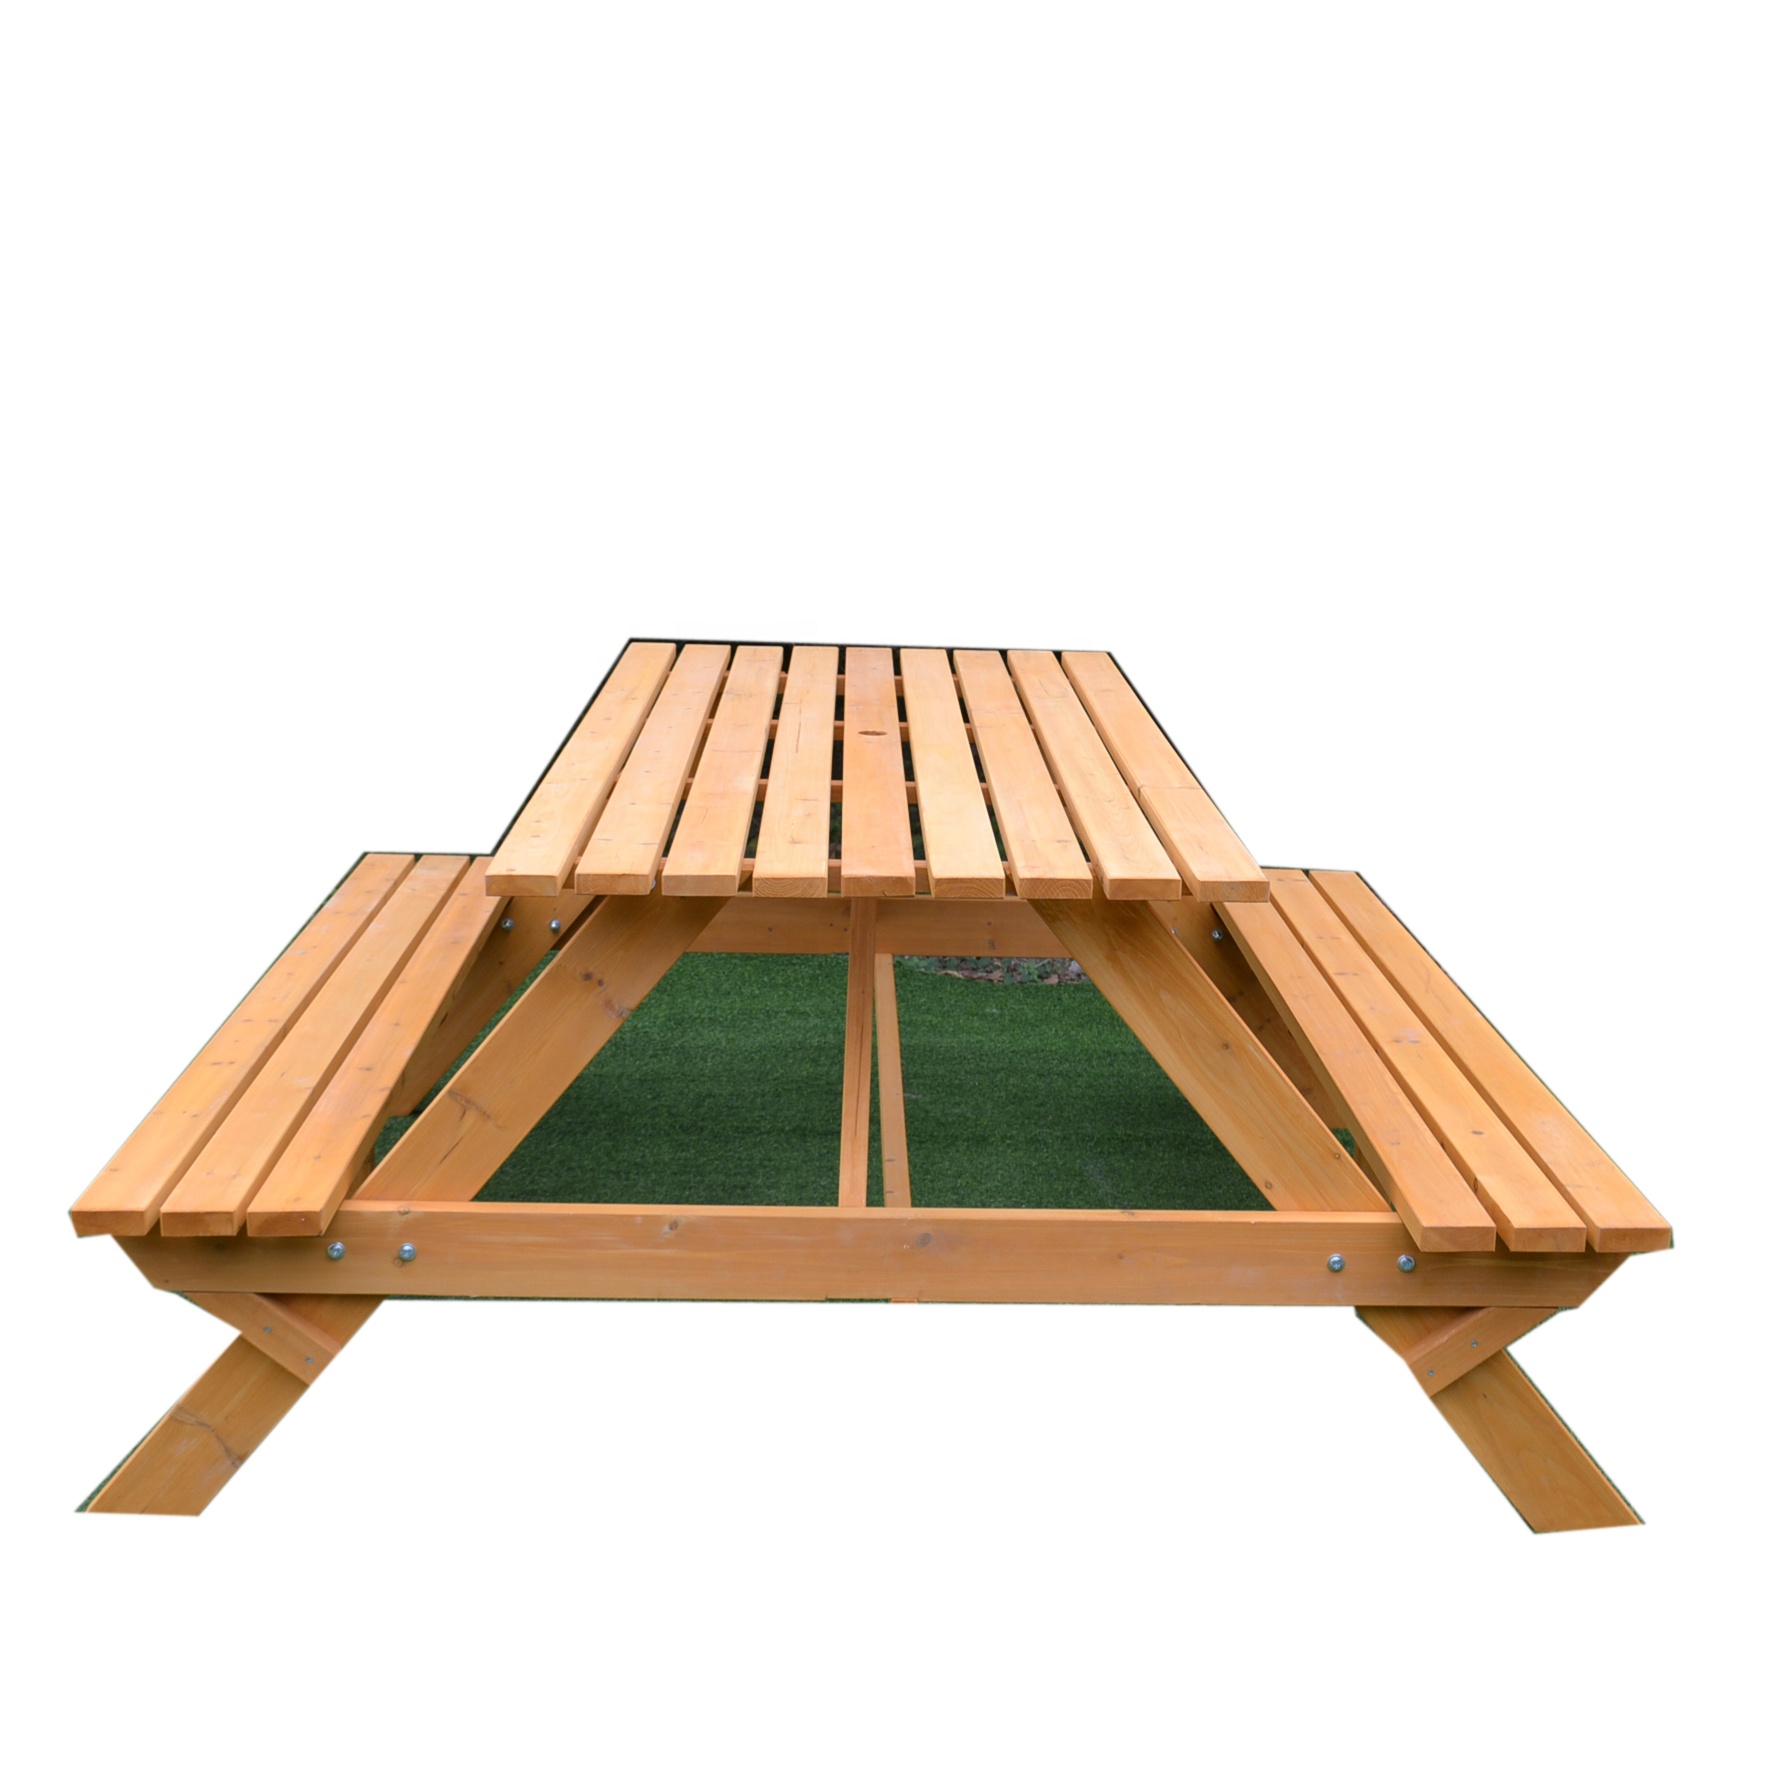 Outdoor park Bench Wooden Storage Garden Chair Slat table Picnic Set with Wood Umbrella Hold Design garden yard beer